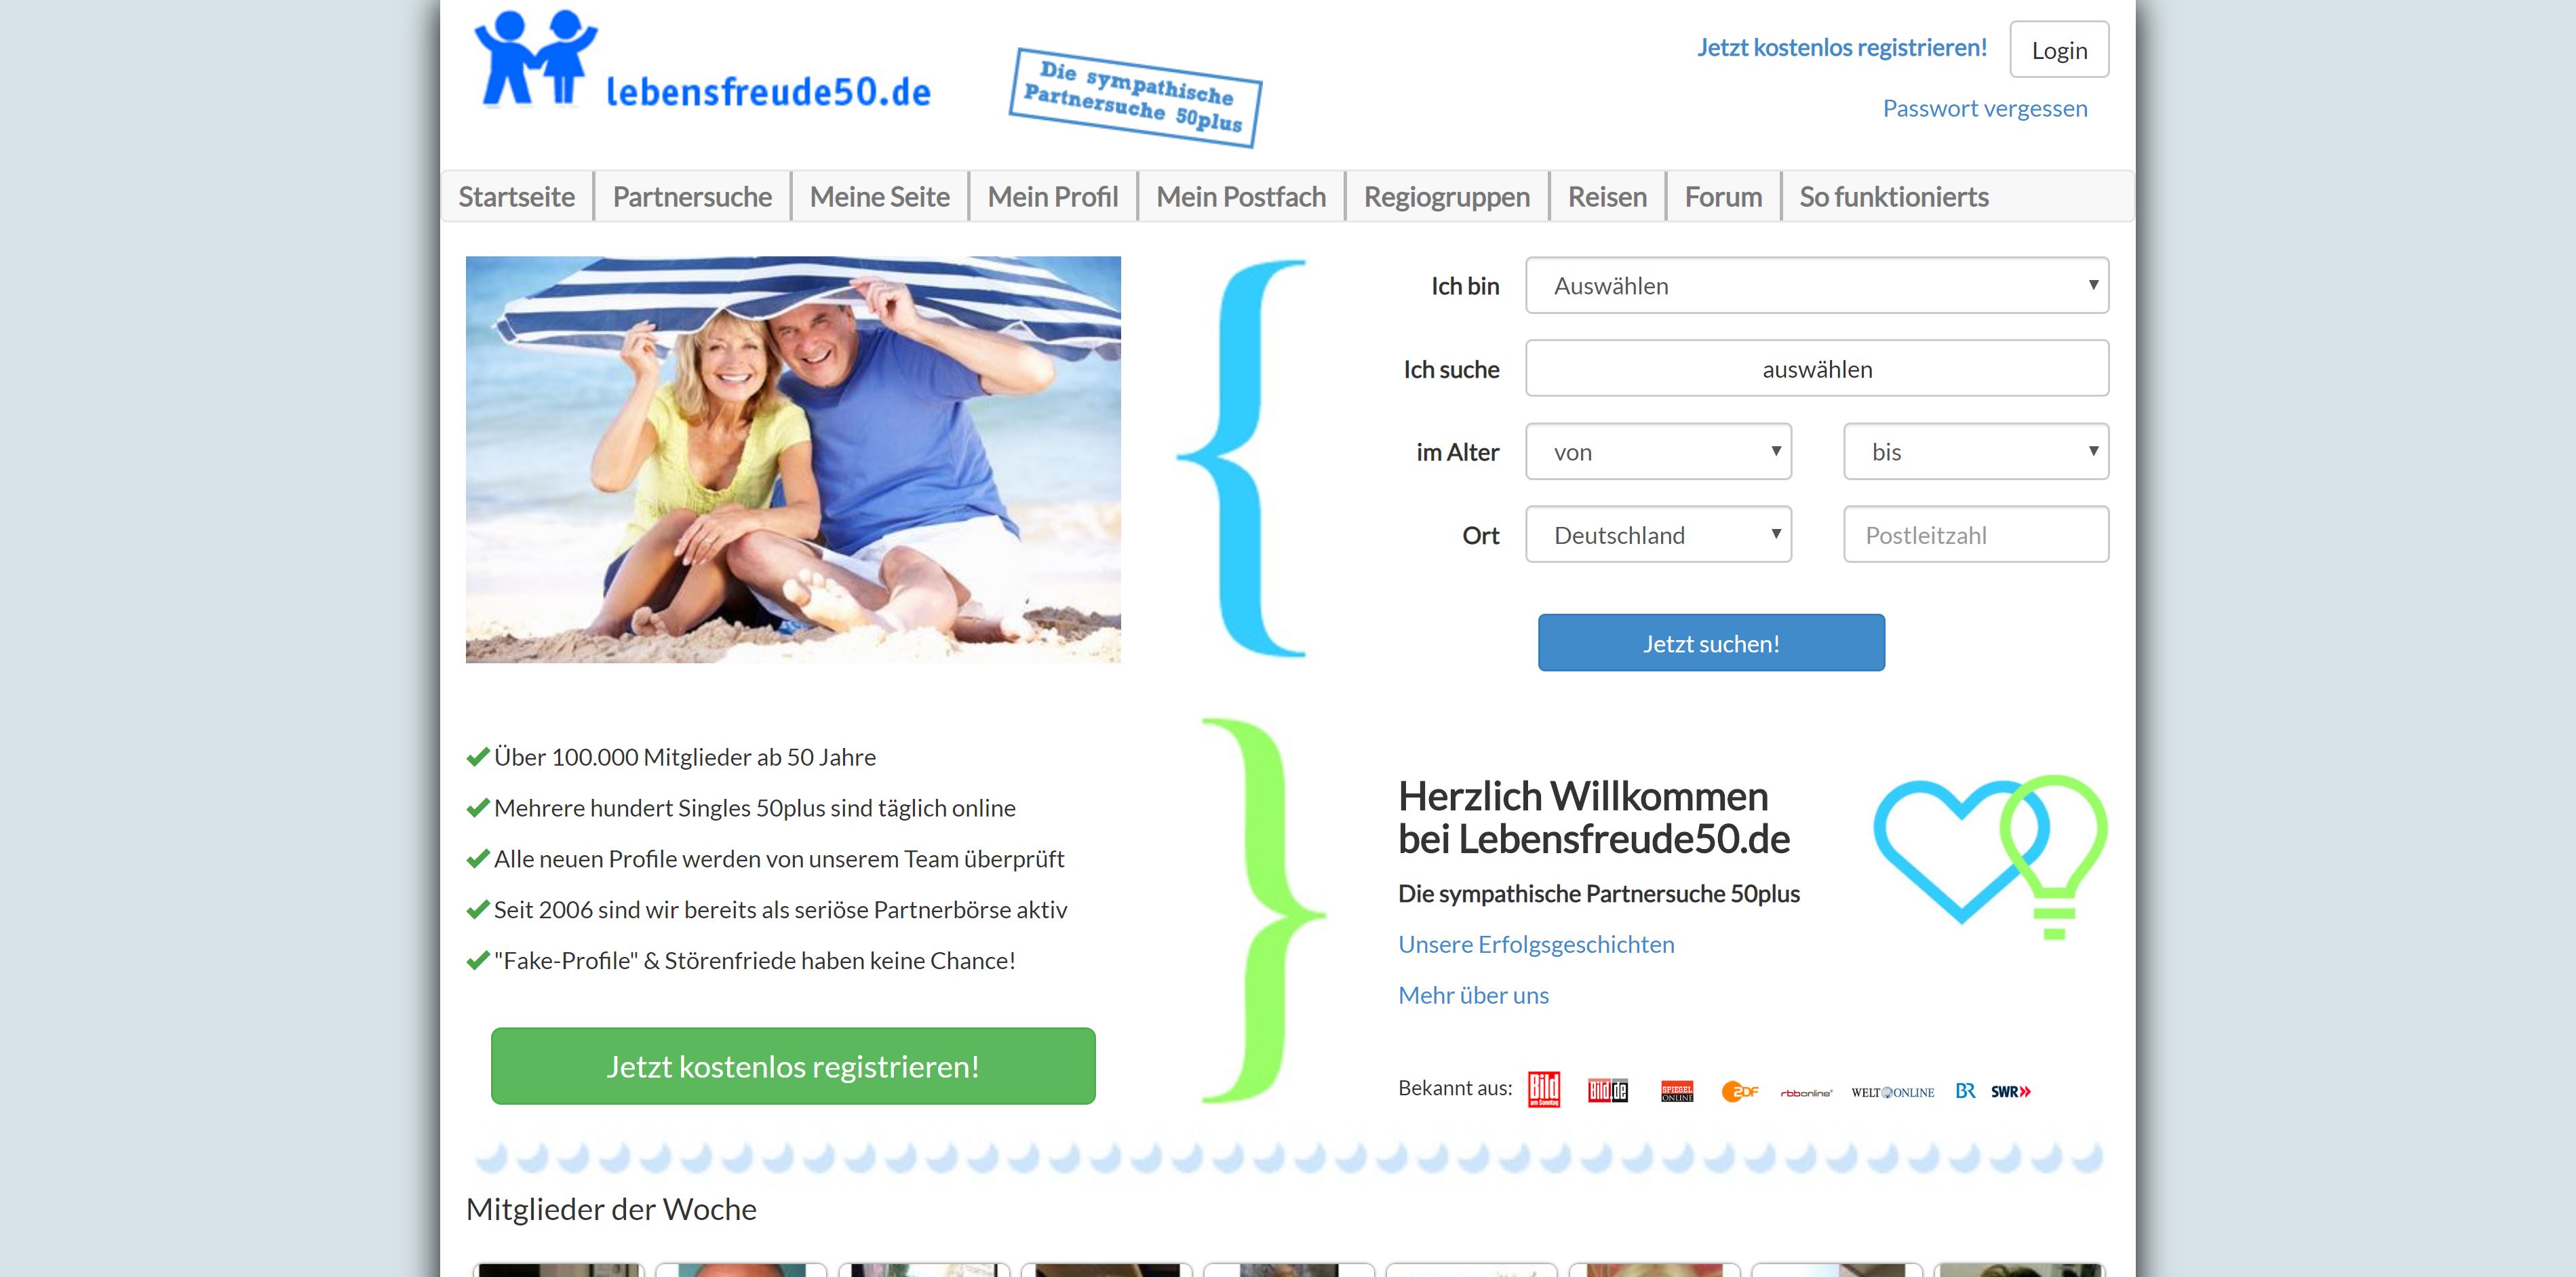 Dating Portal Hamburg kostenlos Vegan speed dating München